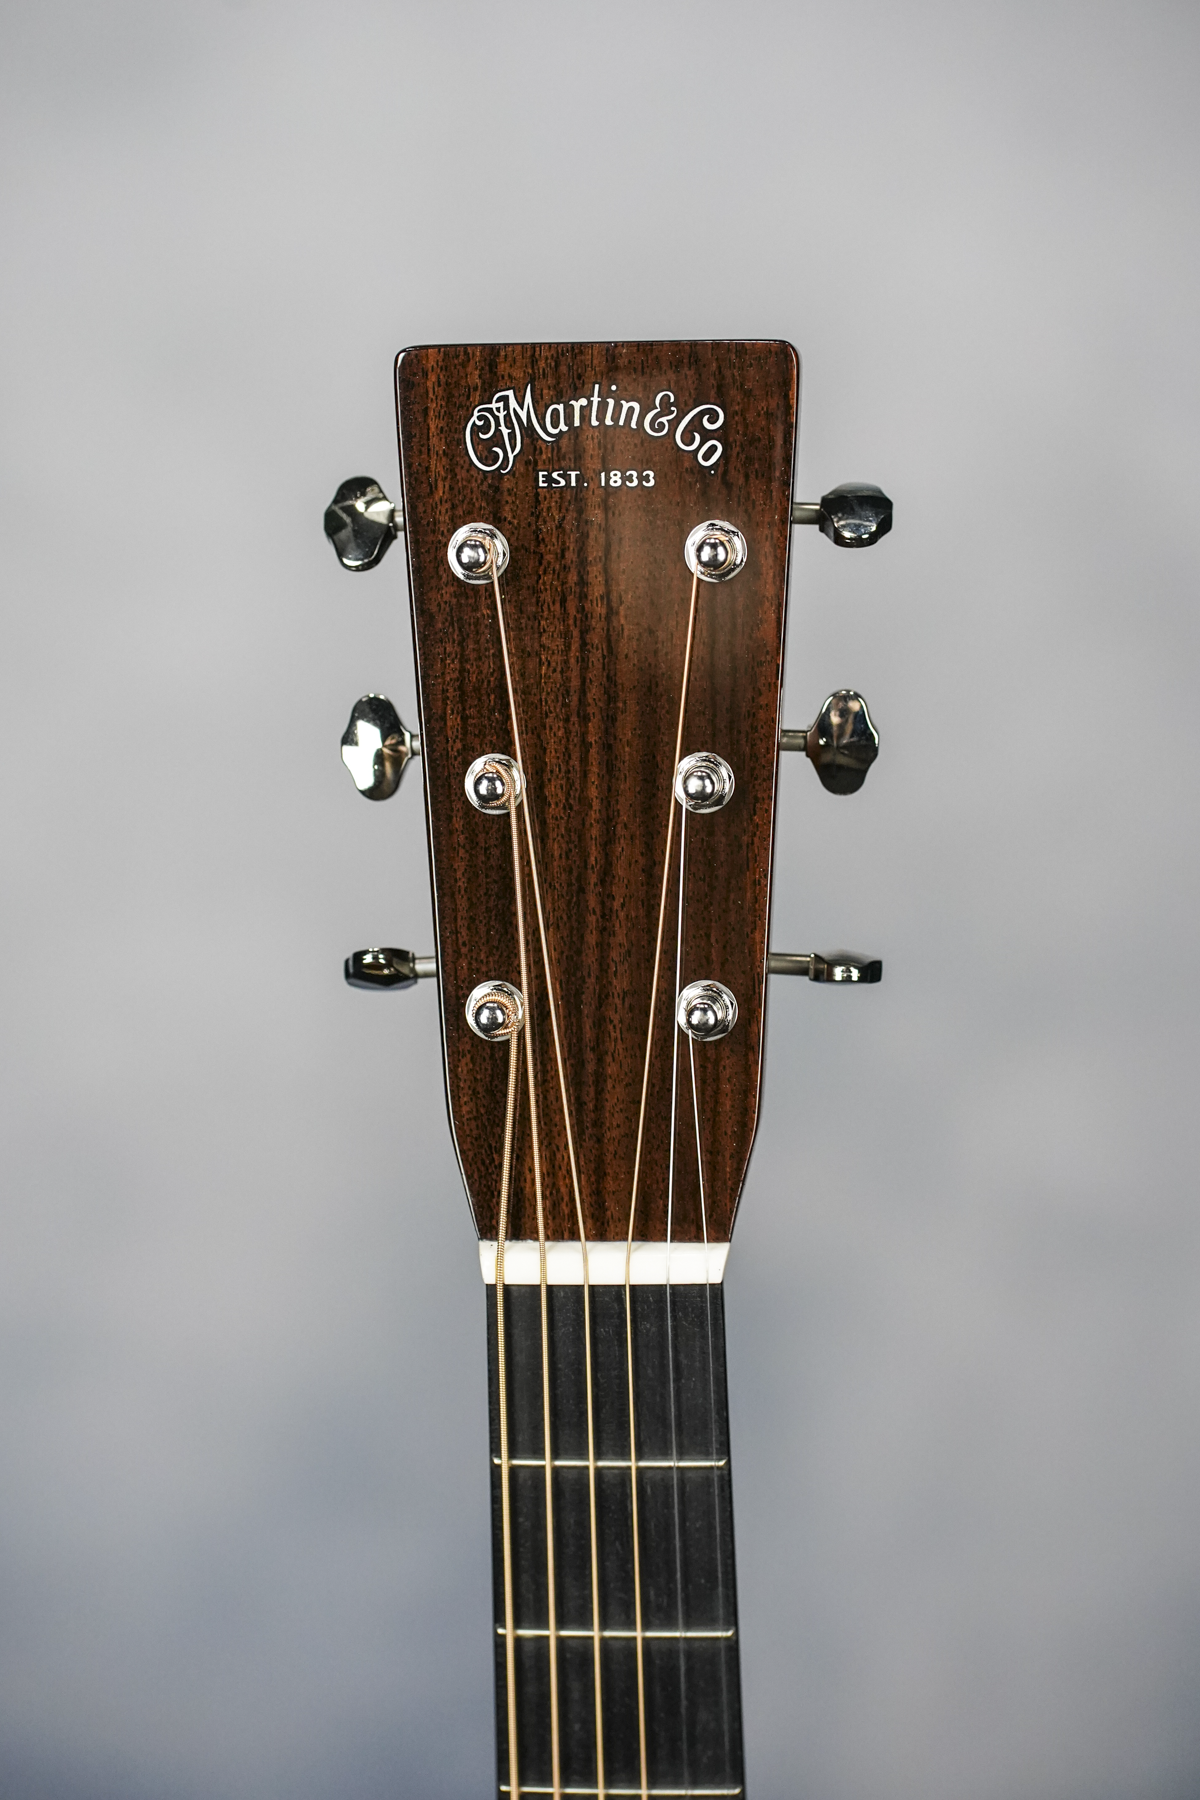 OMJM John Mayer Acoustic Guitar, Natural